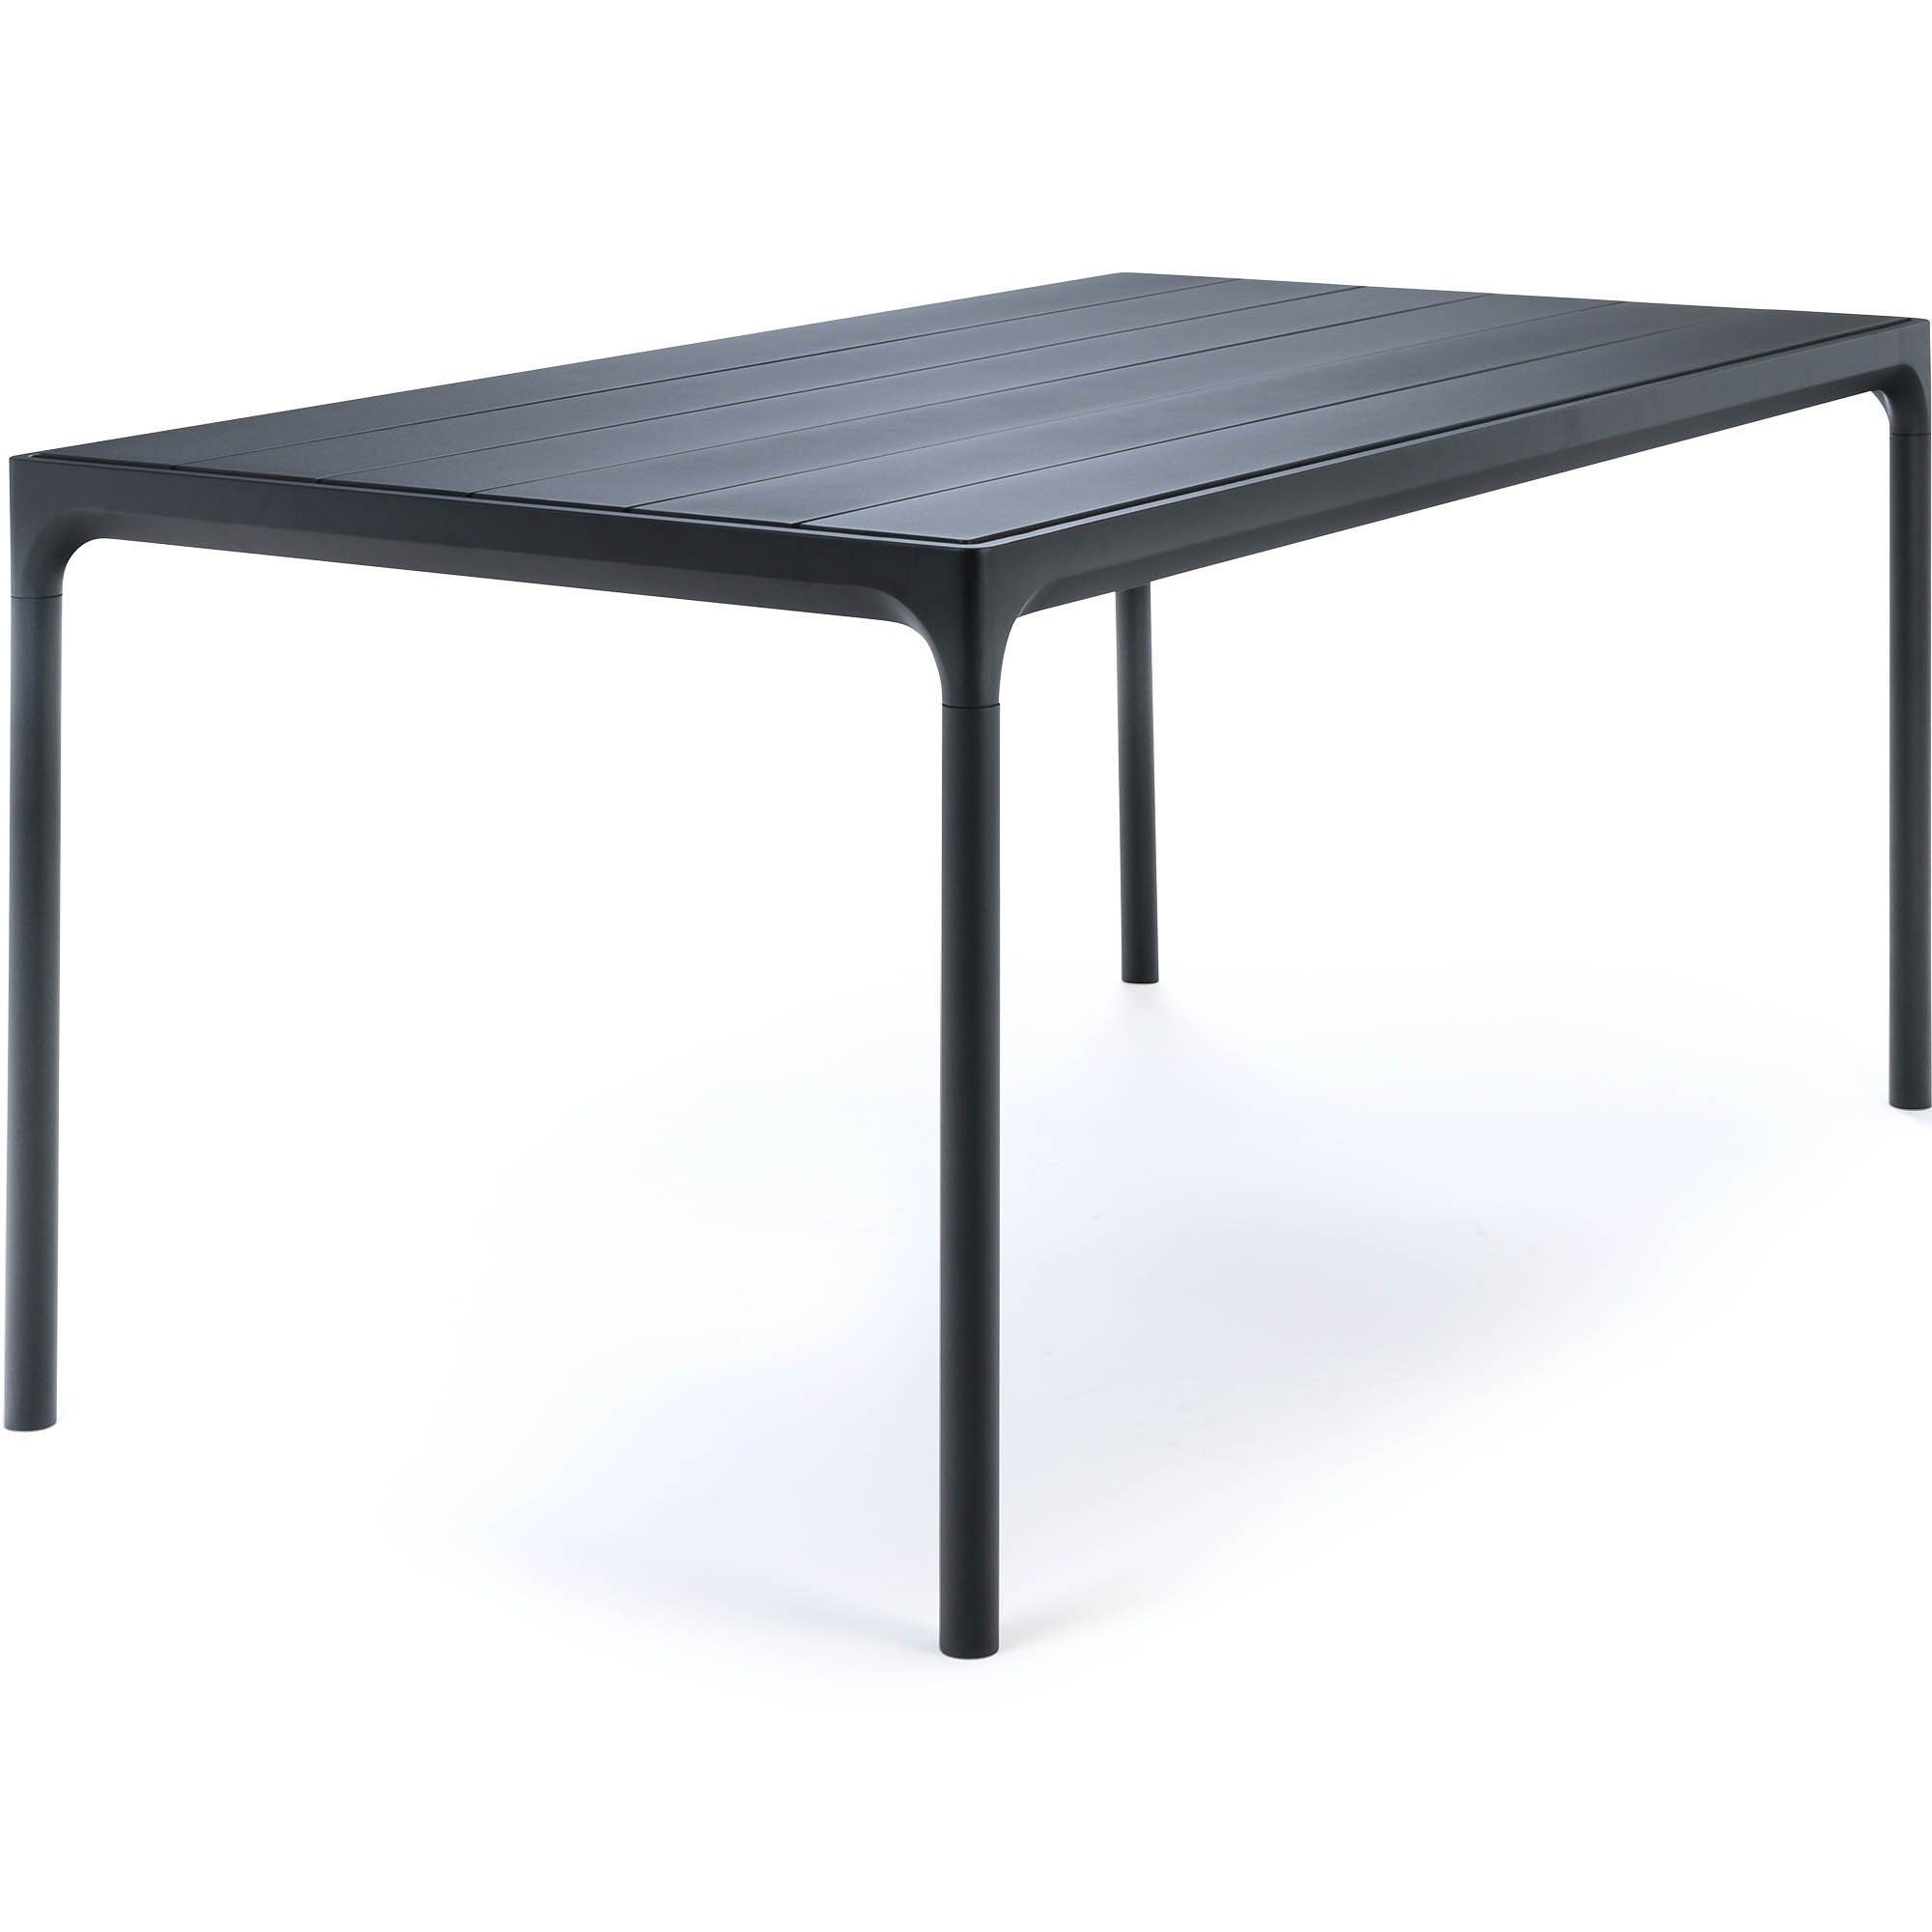 Four bord svart 160x90 cm